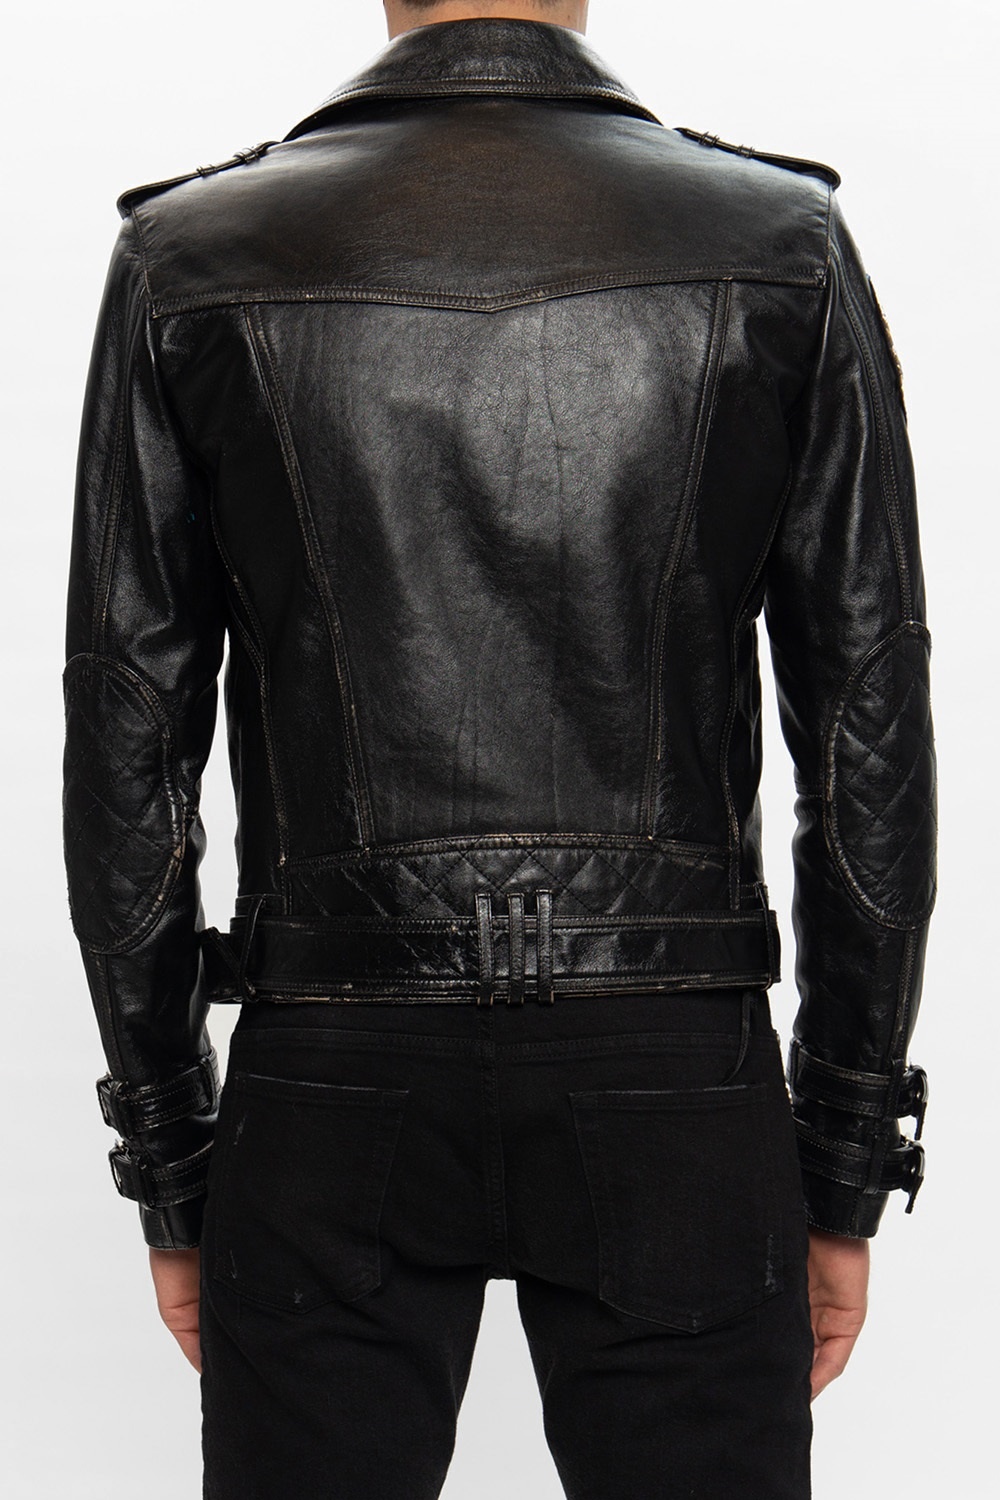 Balmain Zipped leather biker jacket - ShopStyle